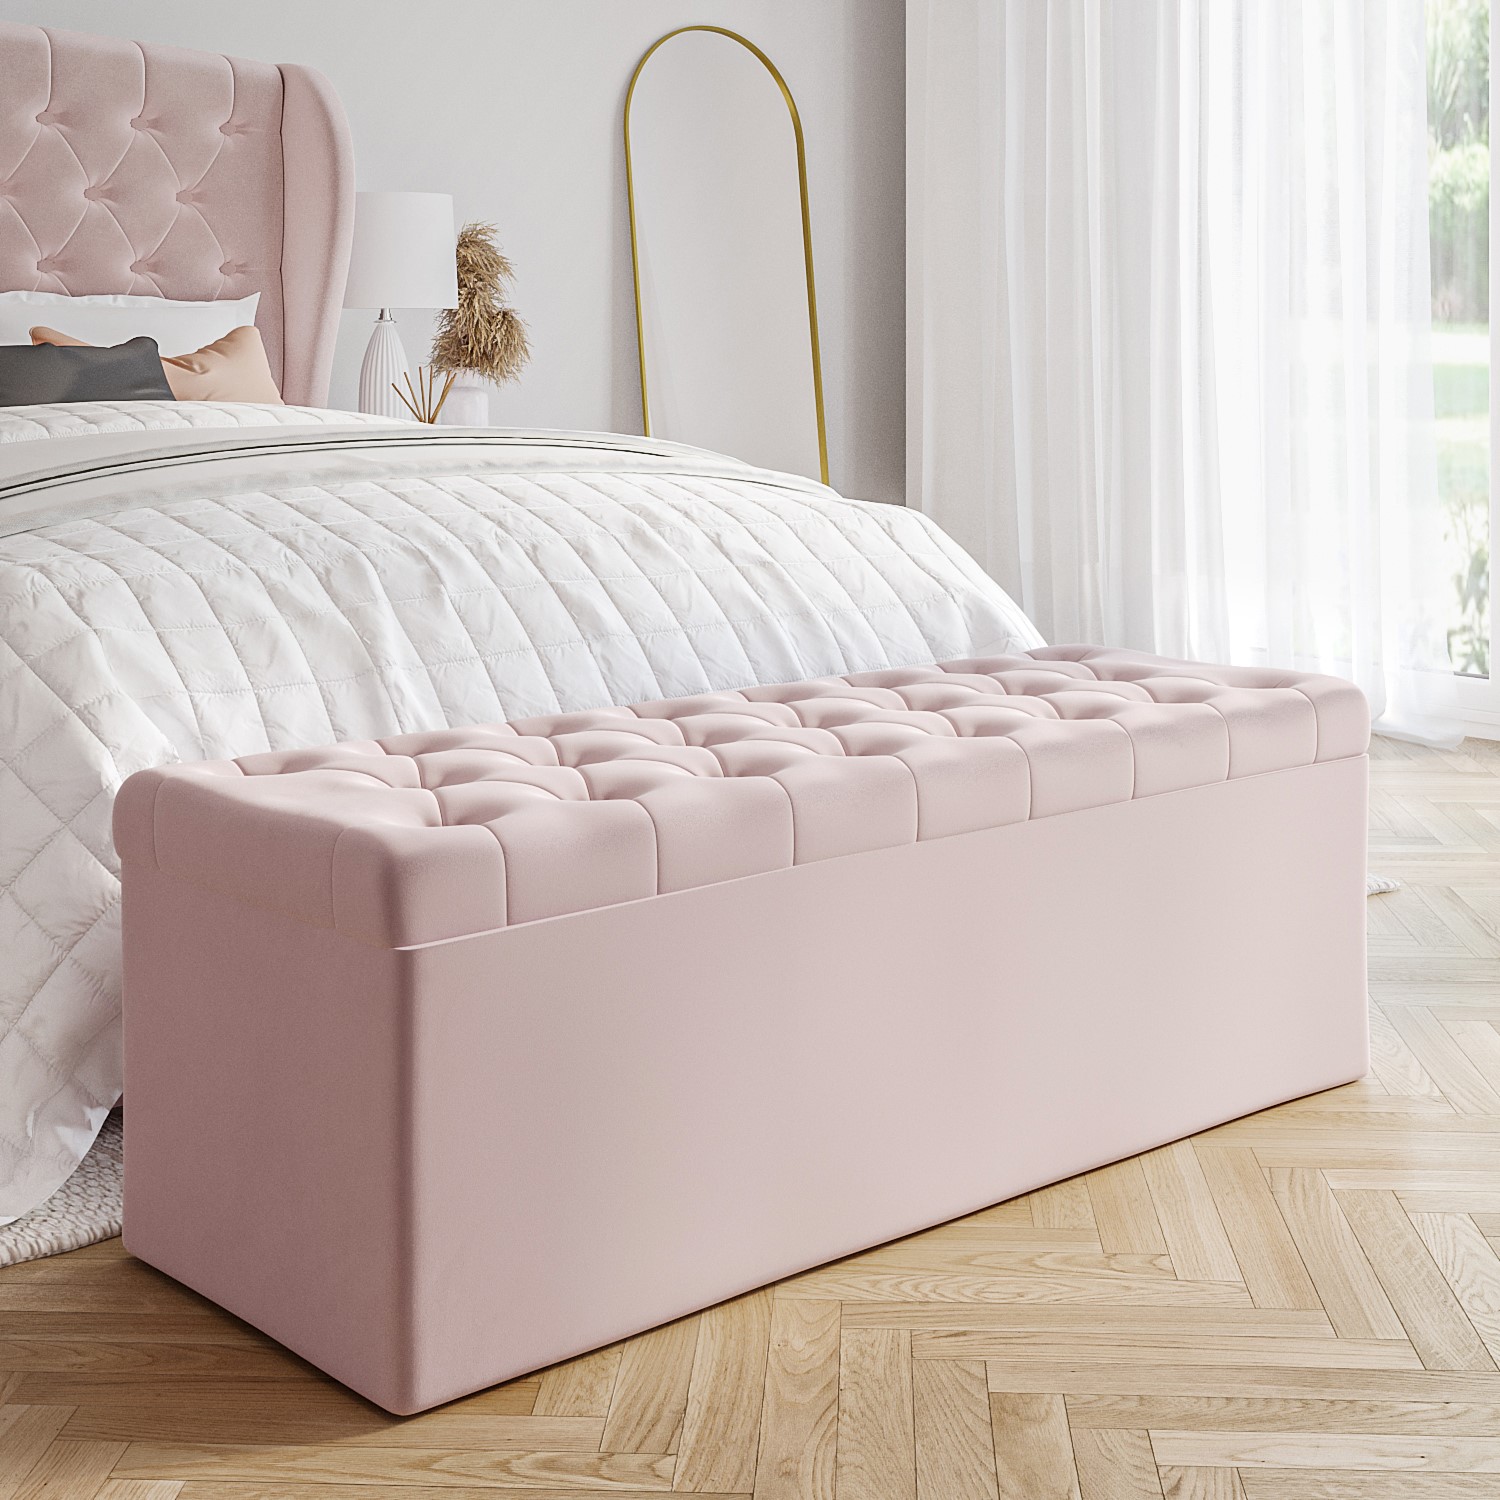 Photo of Safina ottoman storage box in pink velvet